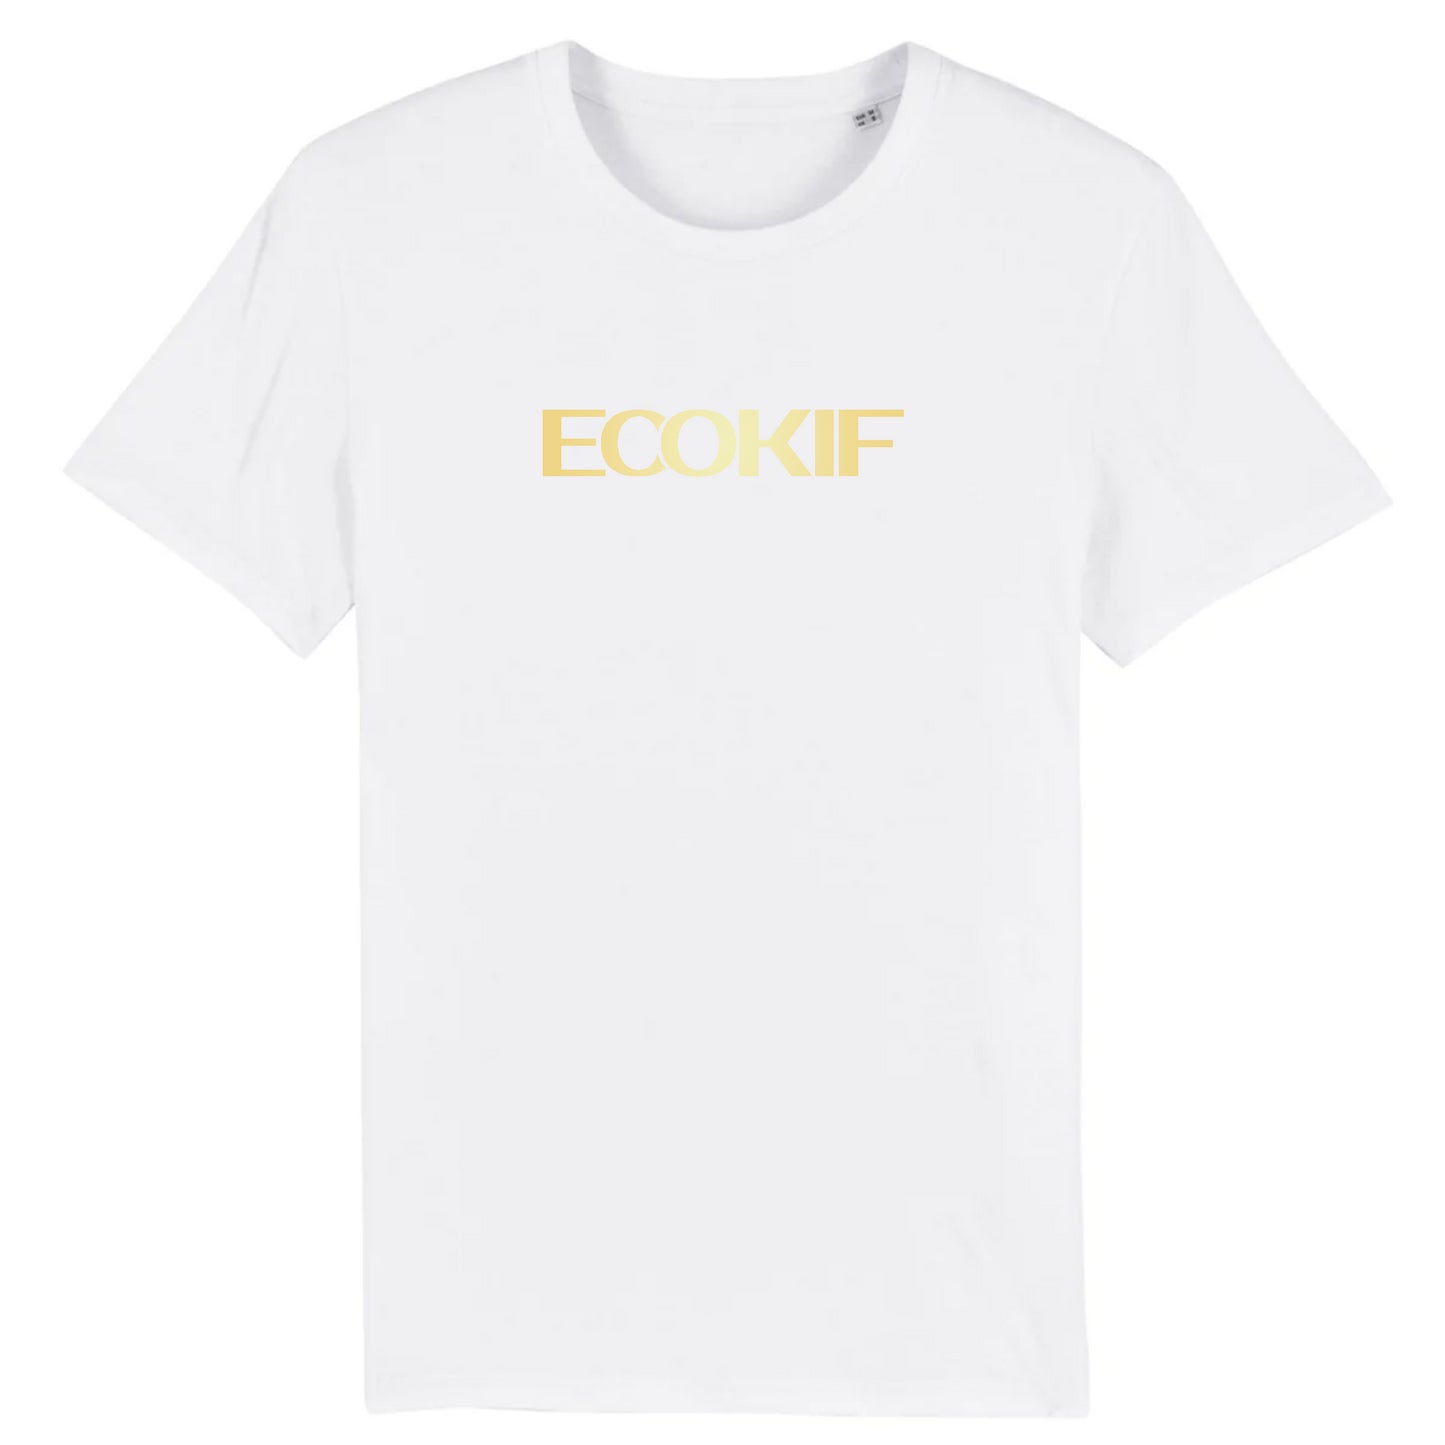 T-Shirt Unisexe U64 - Ecokif Unique